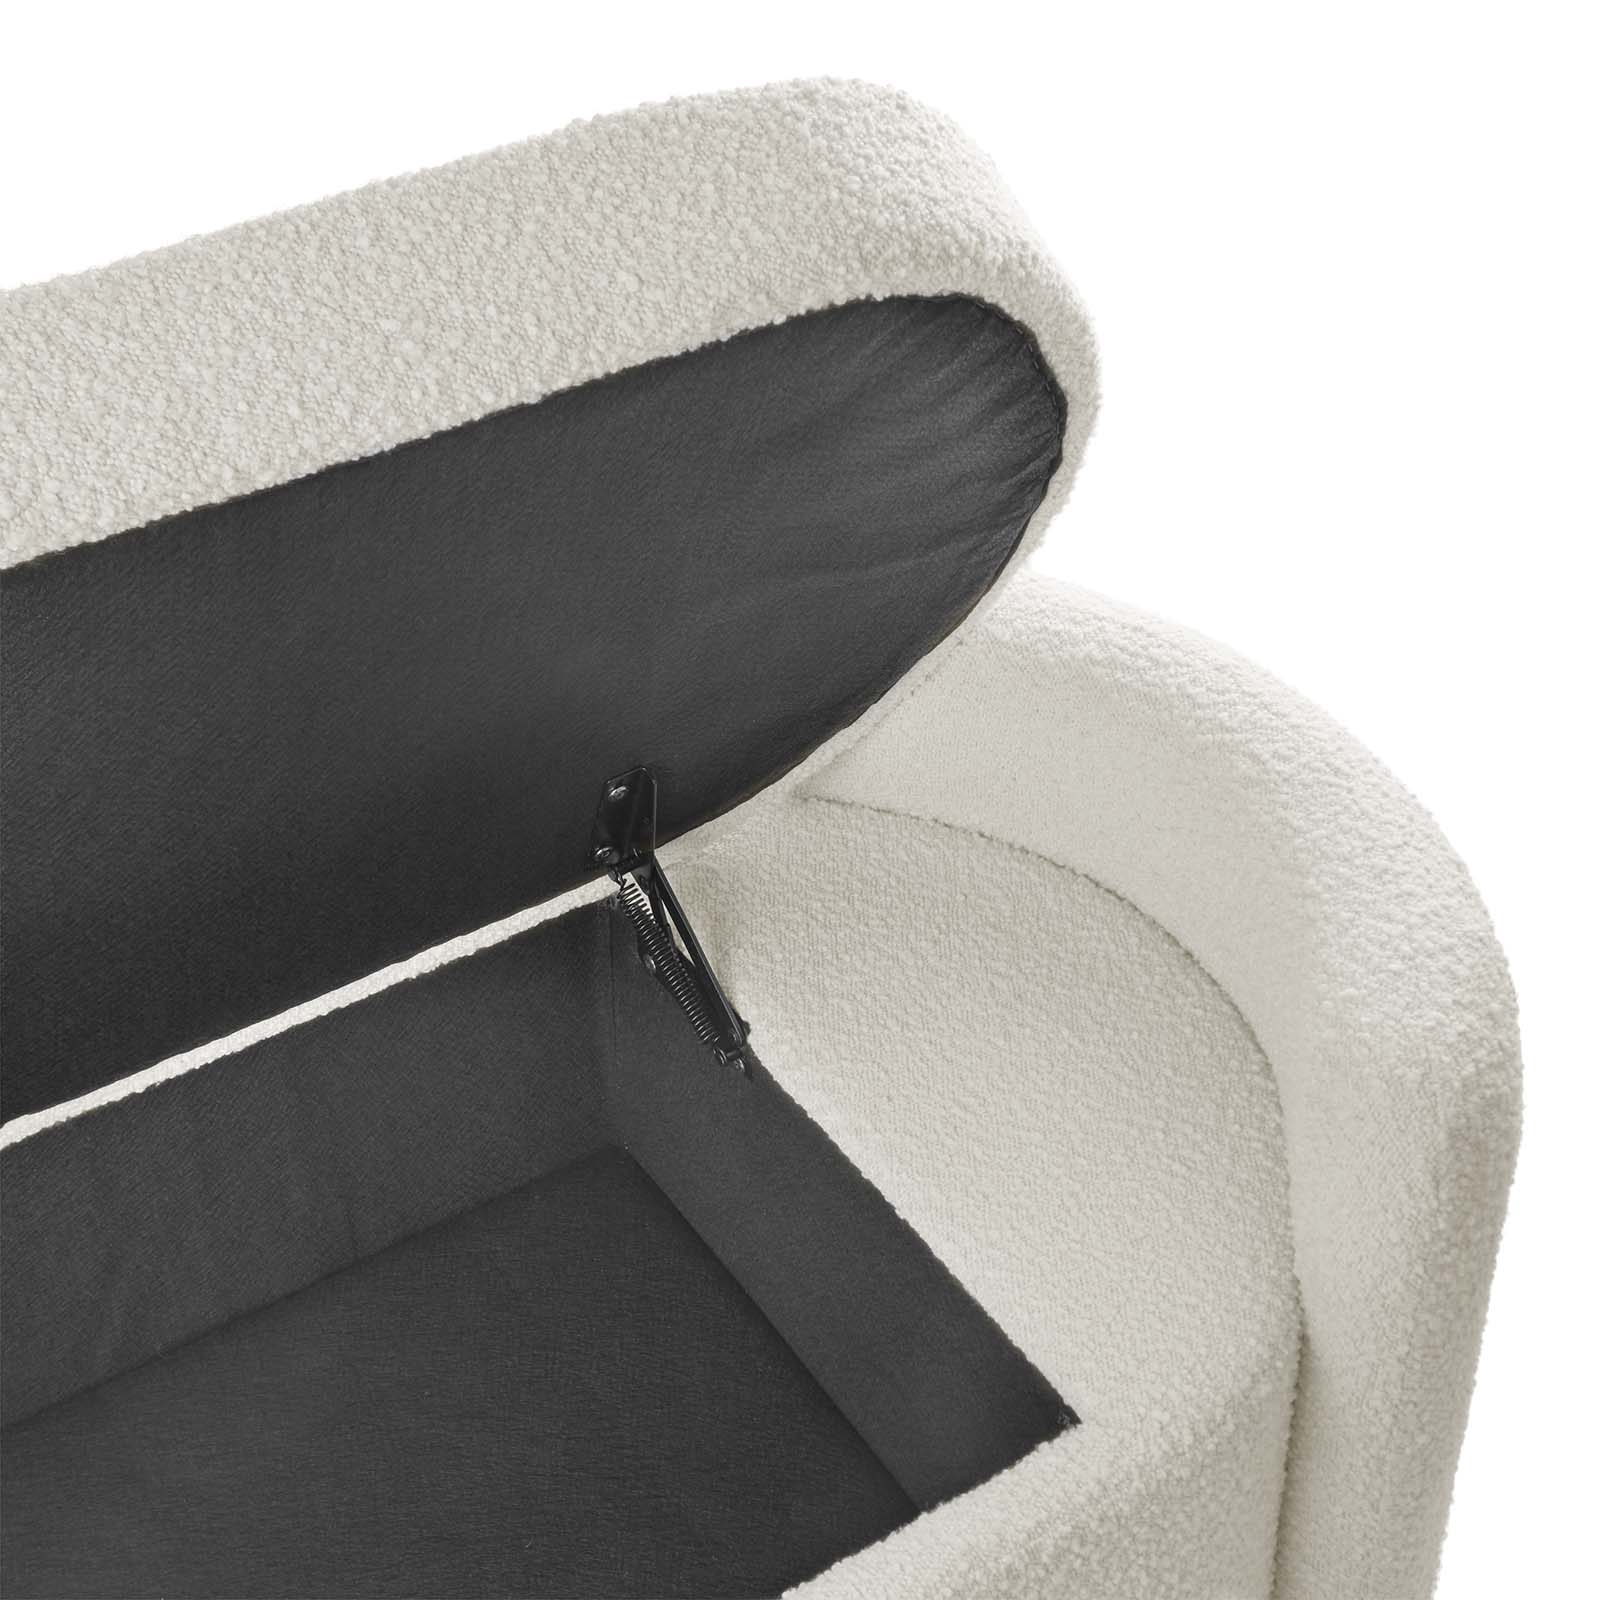 Nebula Boucle Upholstered Bench - East Shore Modern Home Furnishings